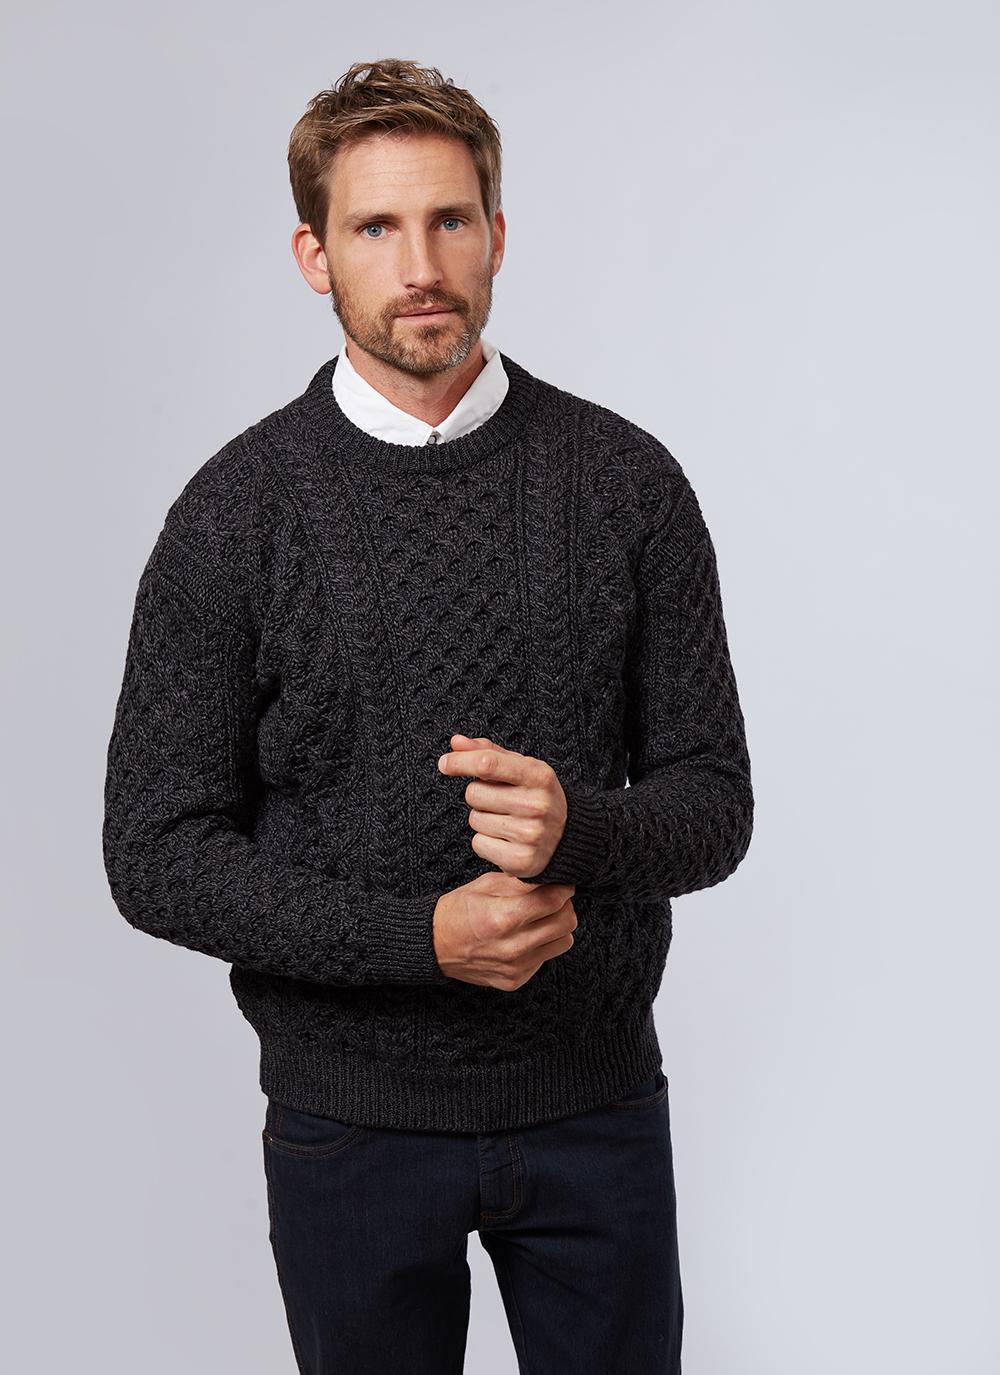 Blasket Honeycomb Stitch Aran Sweater | Blarney